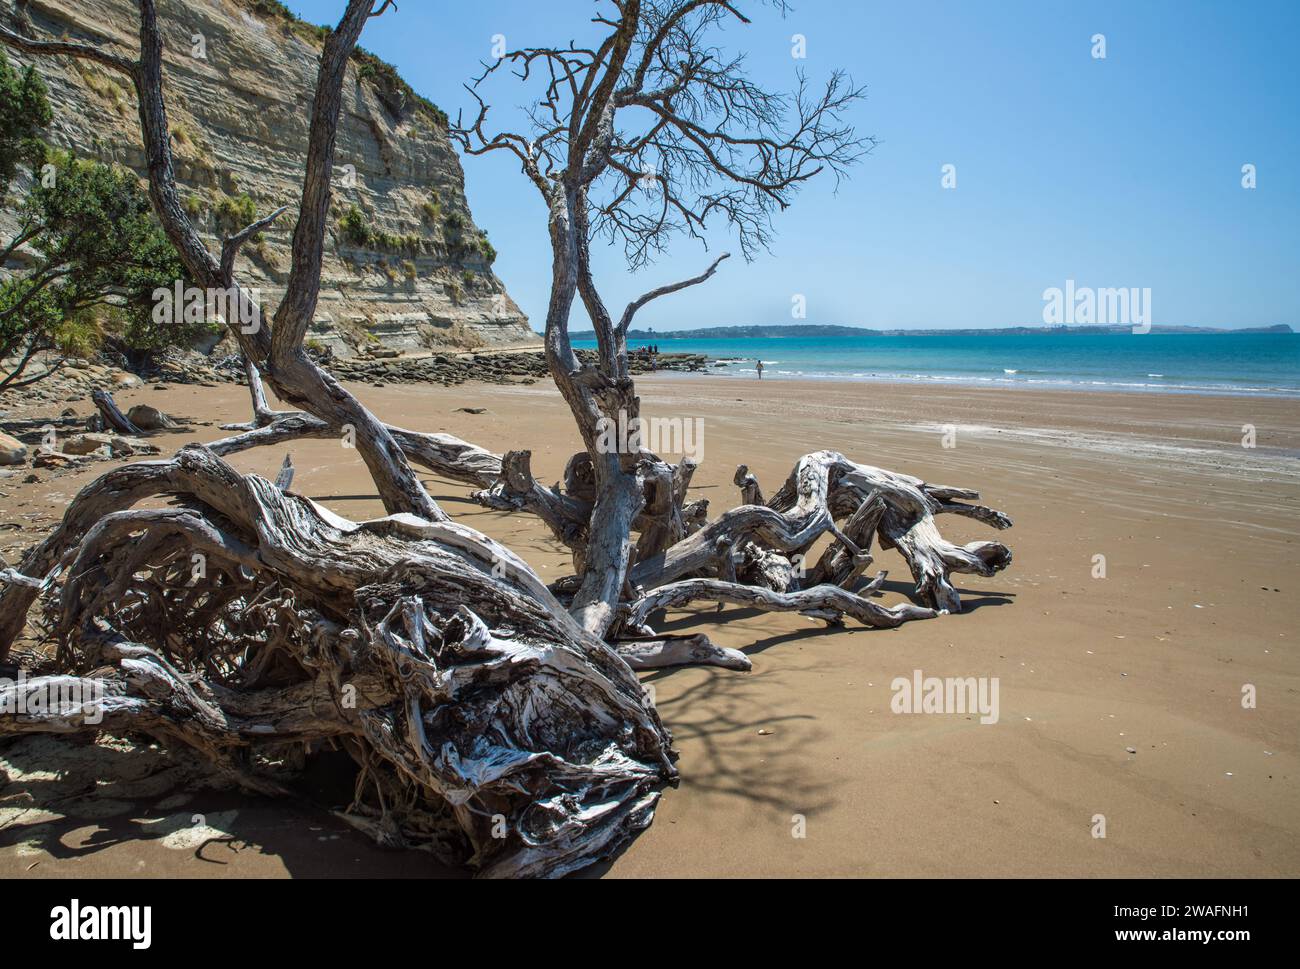 Dead Pohutukawa tree branches (Metrosideros excelsa) on the beach at Long Bay, Hauraki Gulf, Auckland area, New Zealand Stock Photo